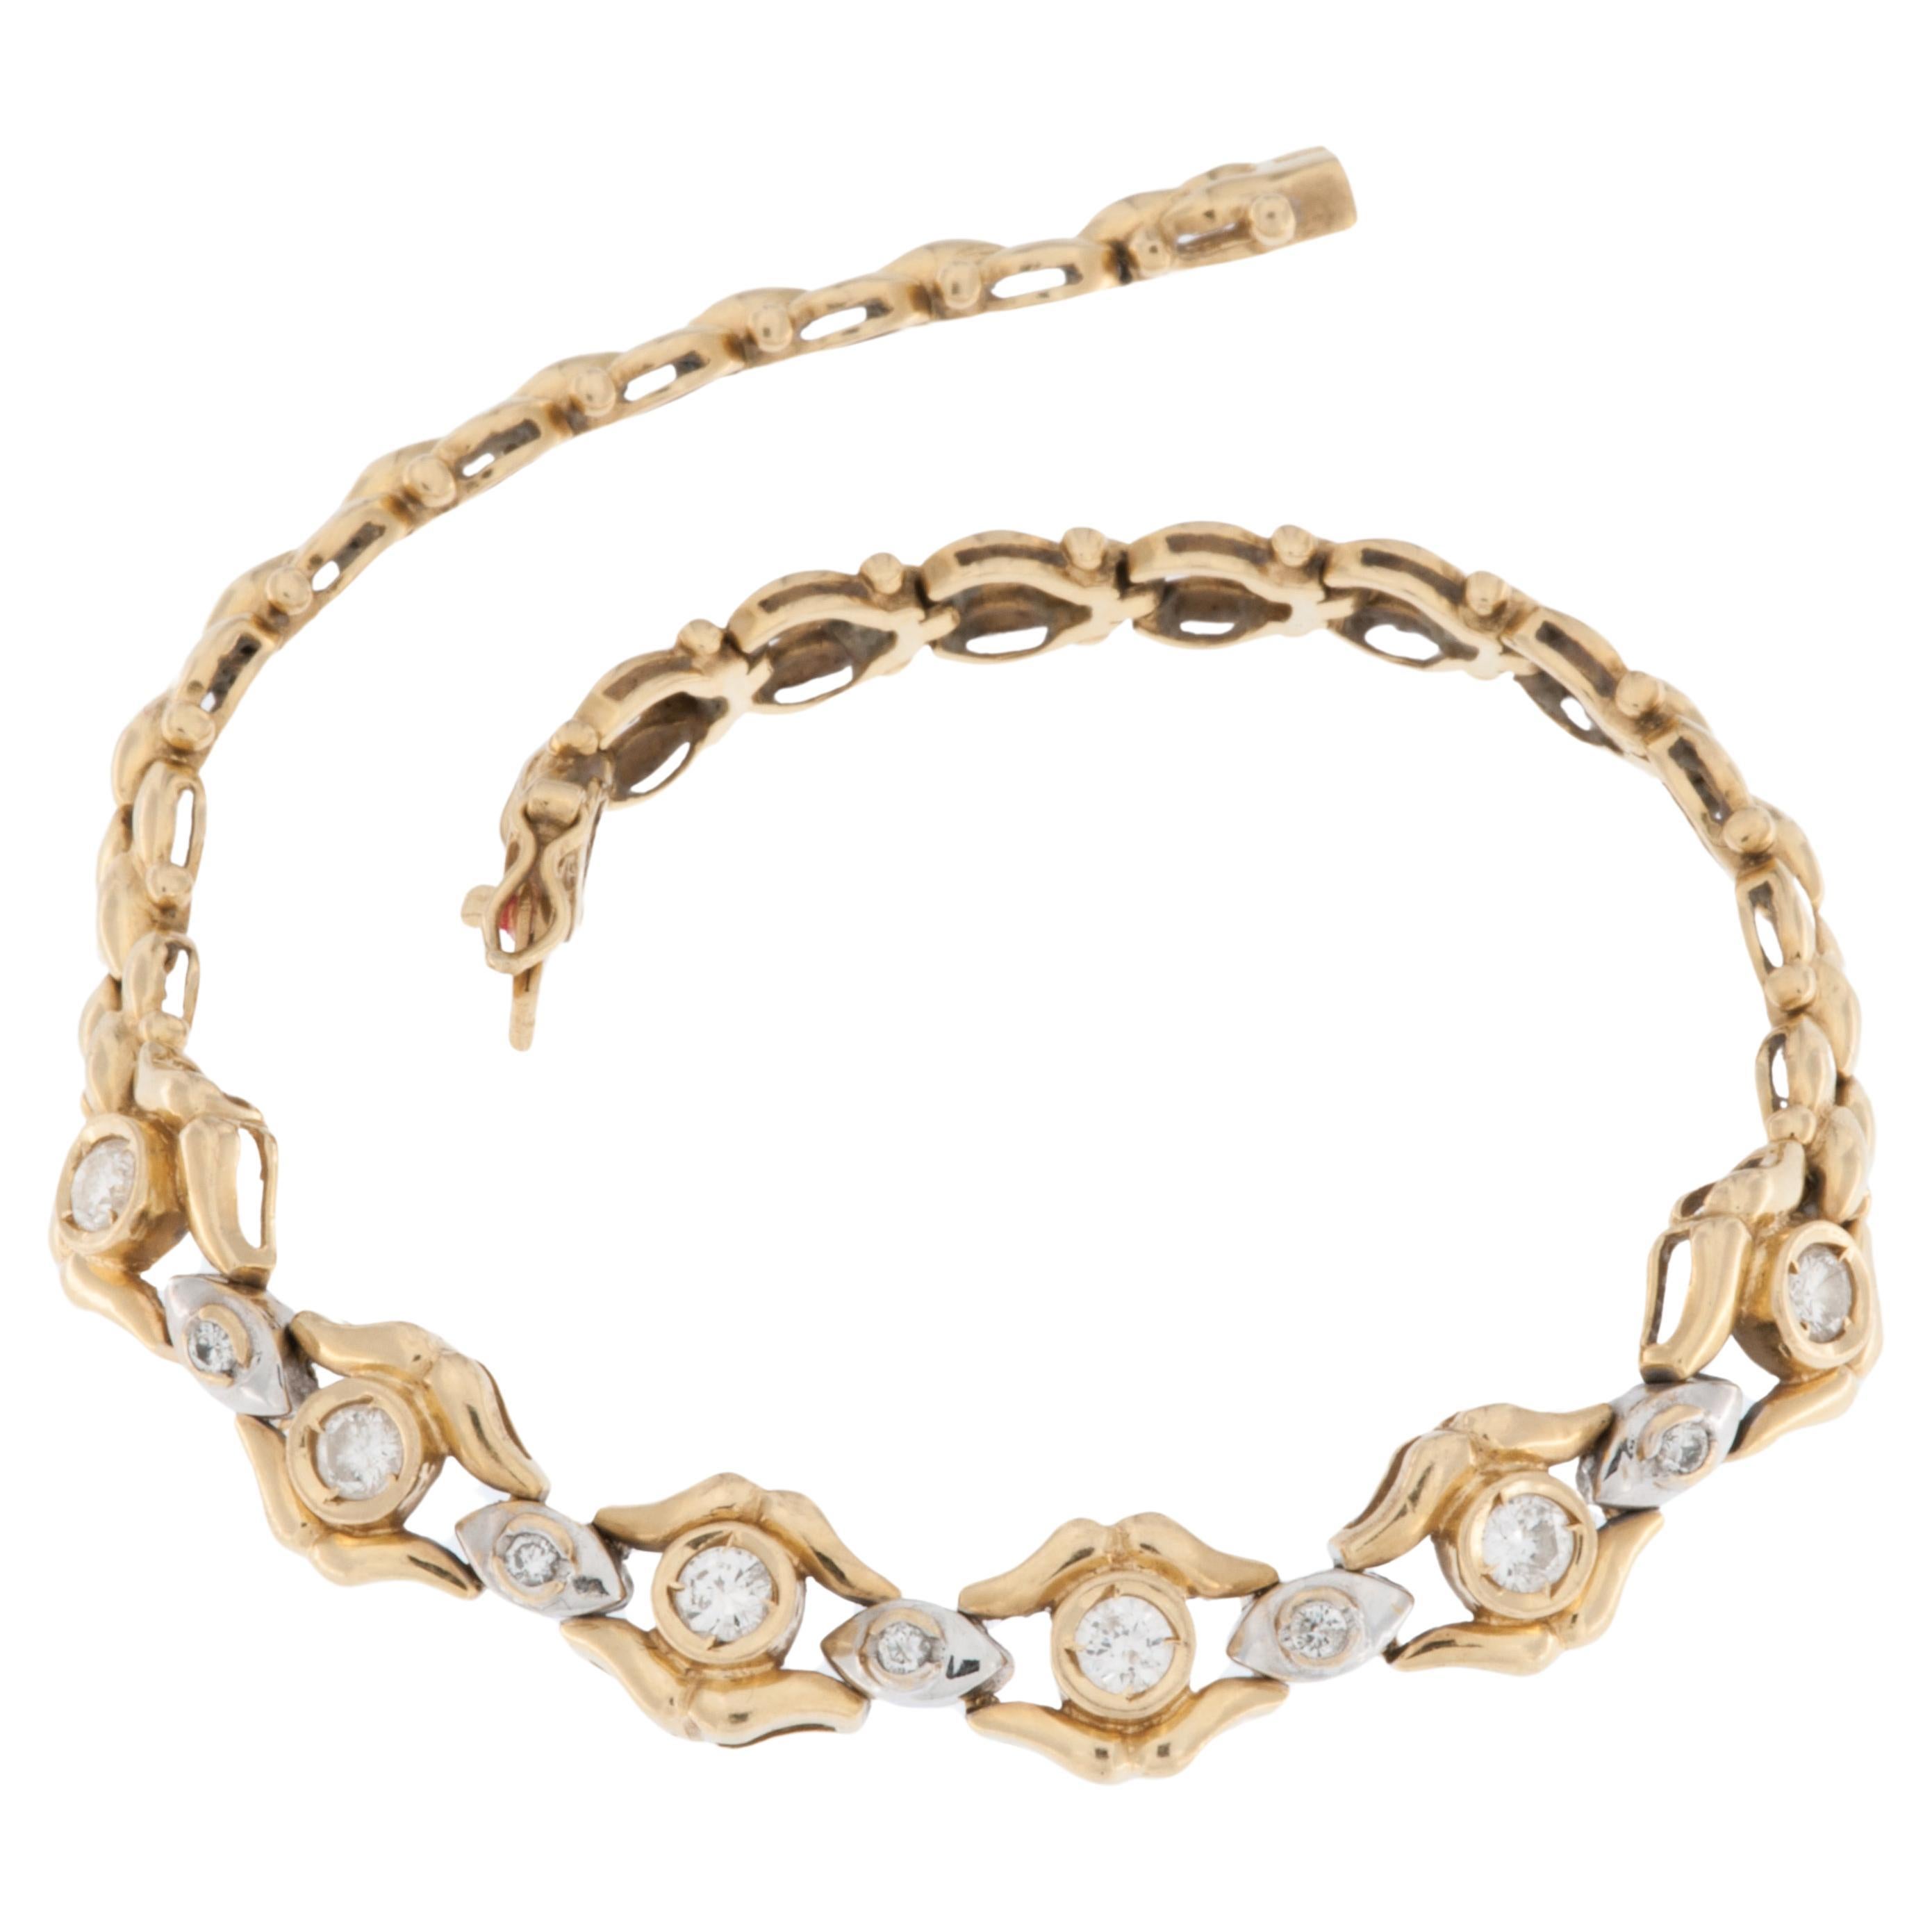 Spanish 18kt Gold Bracelet with Diamonds